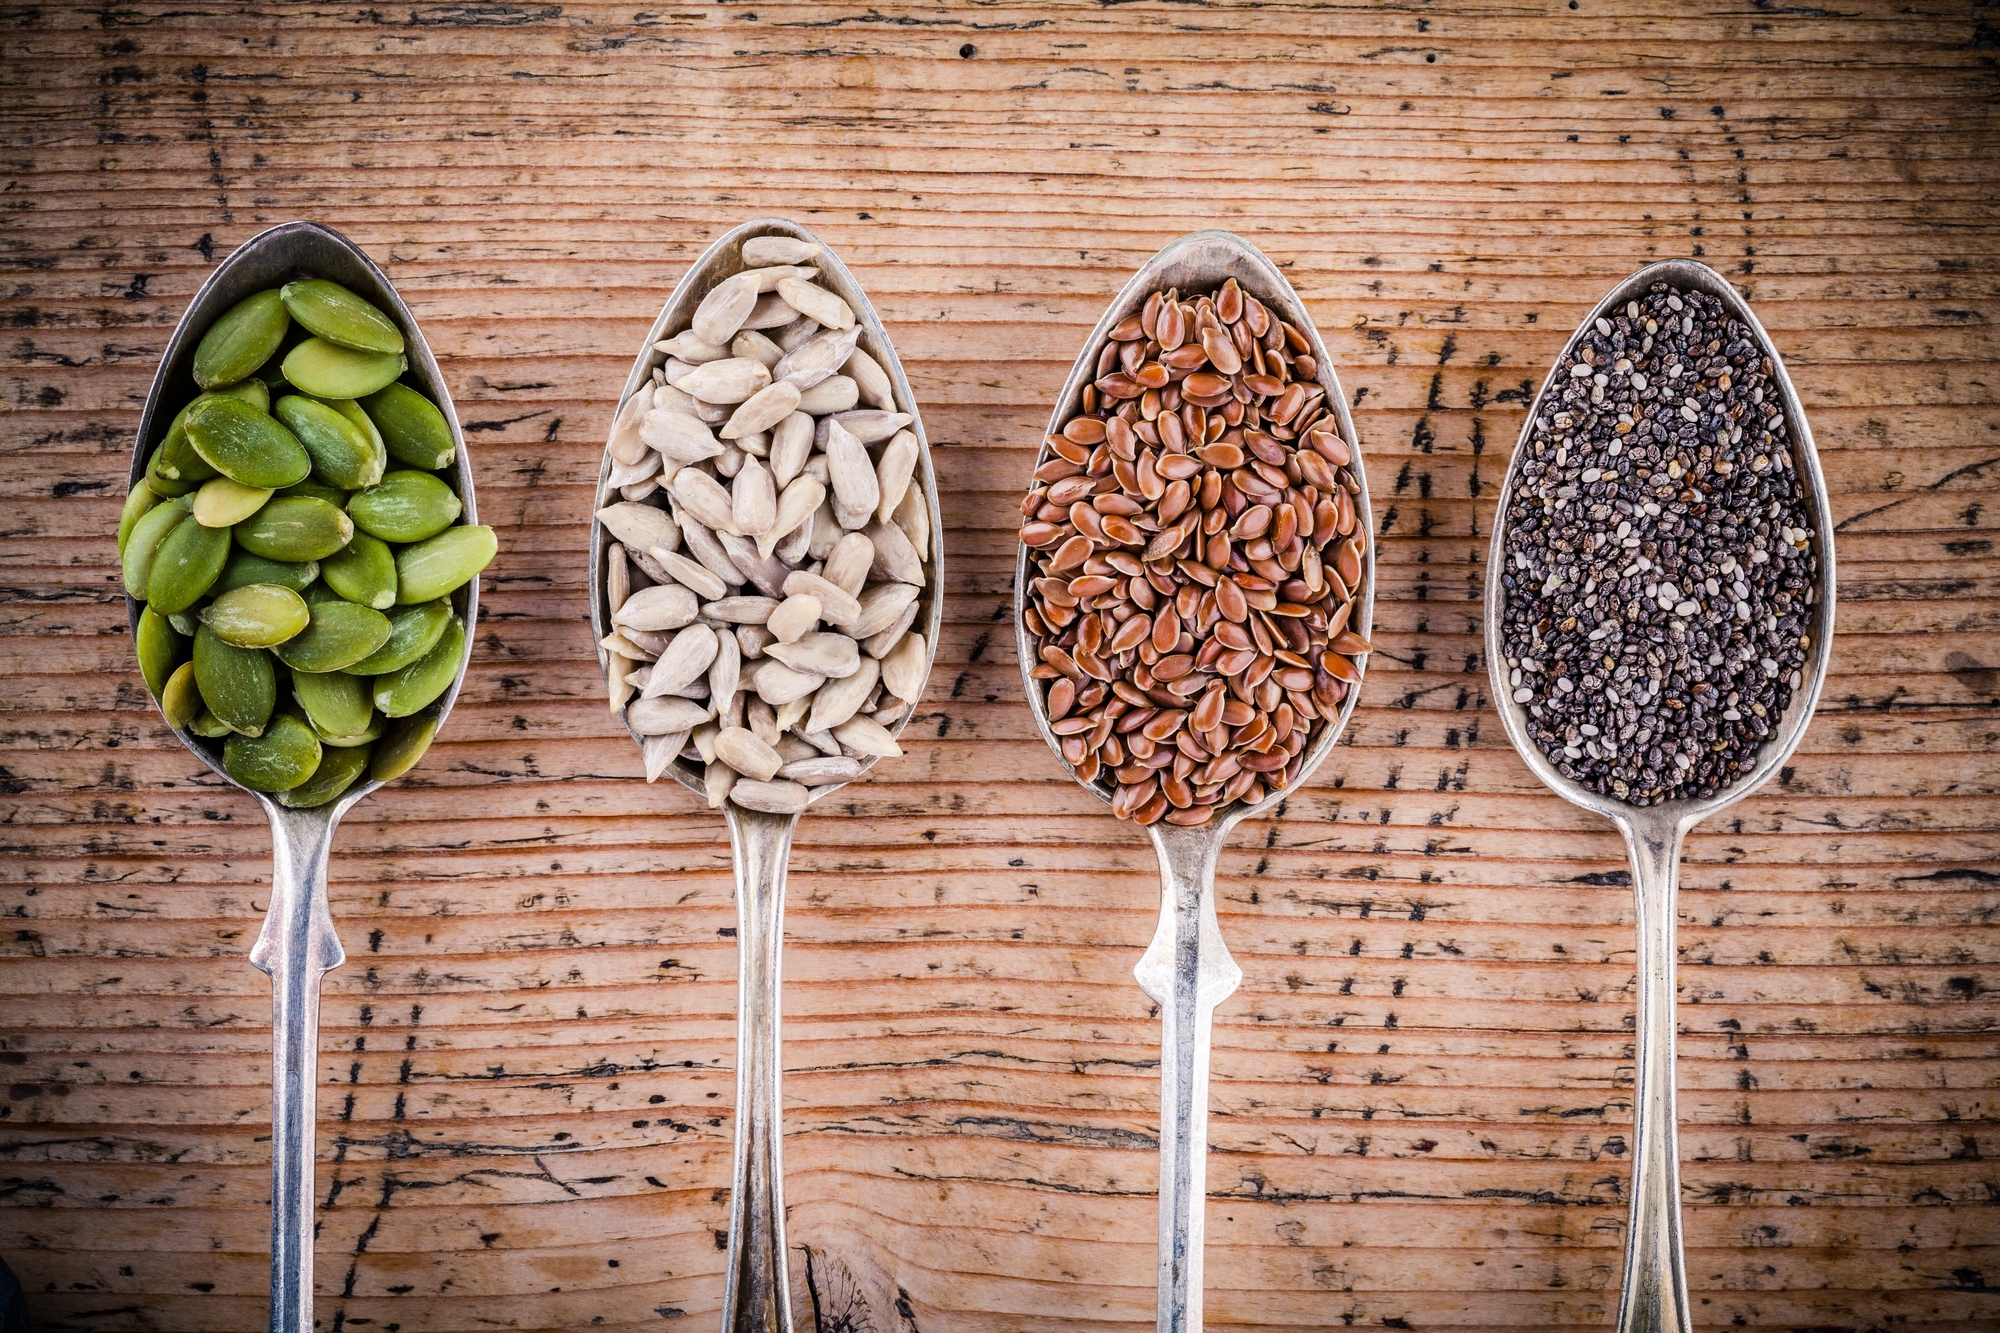 Healthy superfood: pumpkin seeds, sunflower seeds, flax seeds and chia